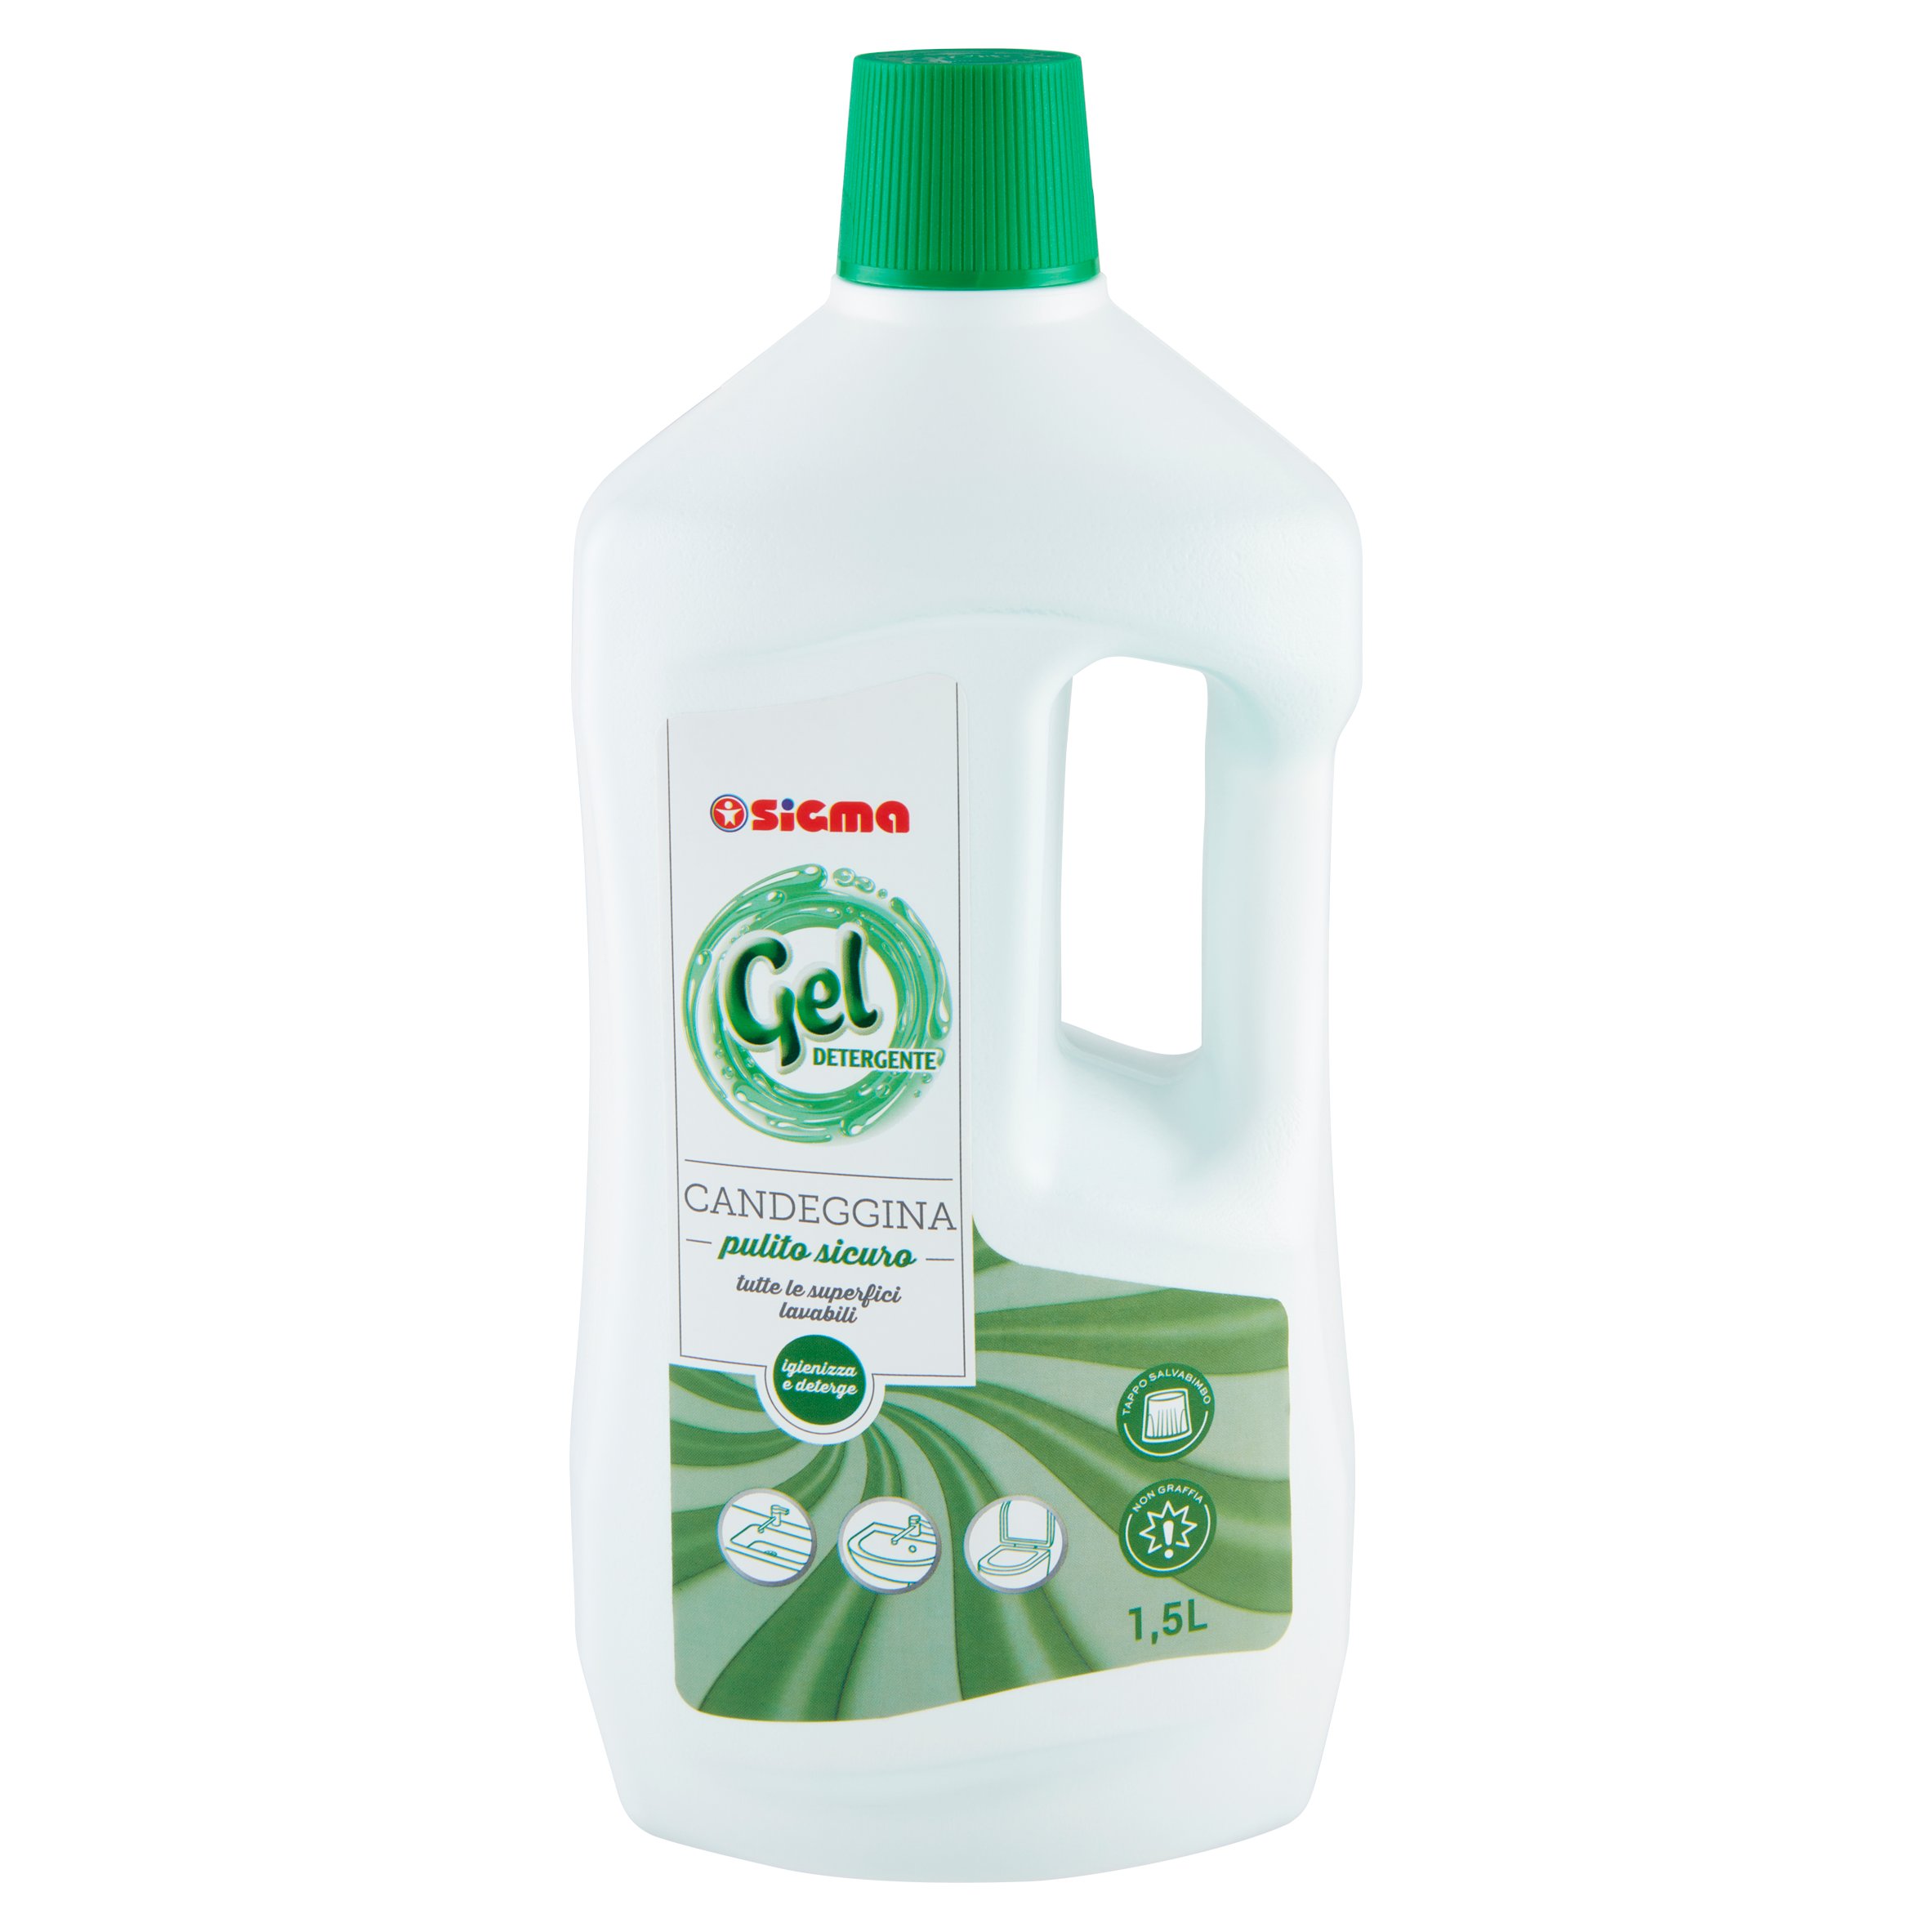 Sigma Gel Detergente Candeggina 1,5 L - SuperSIGMA